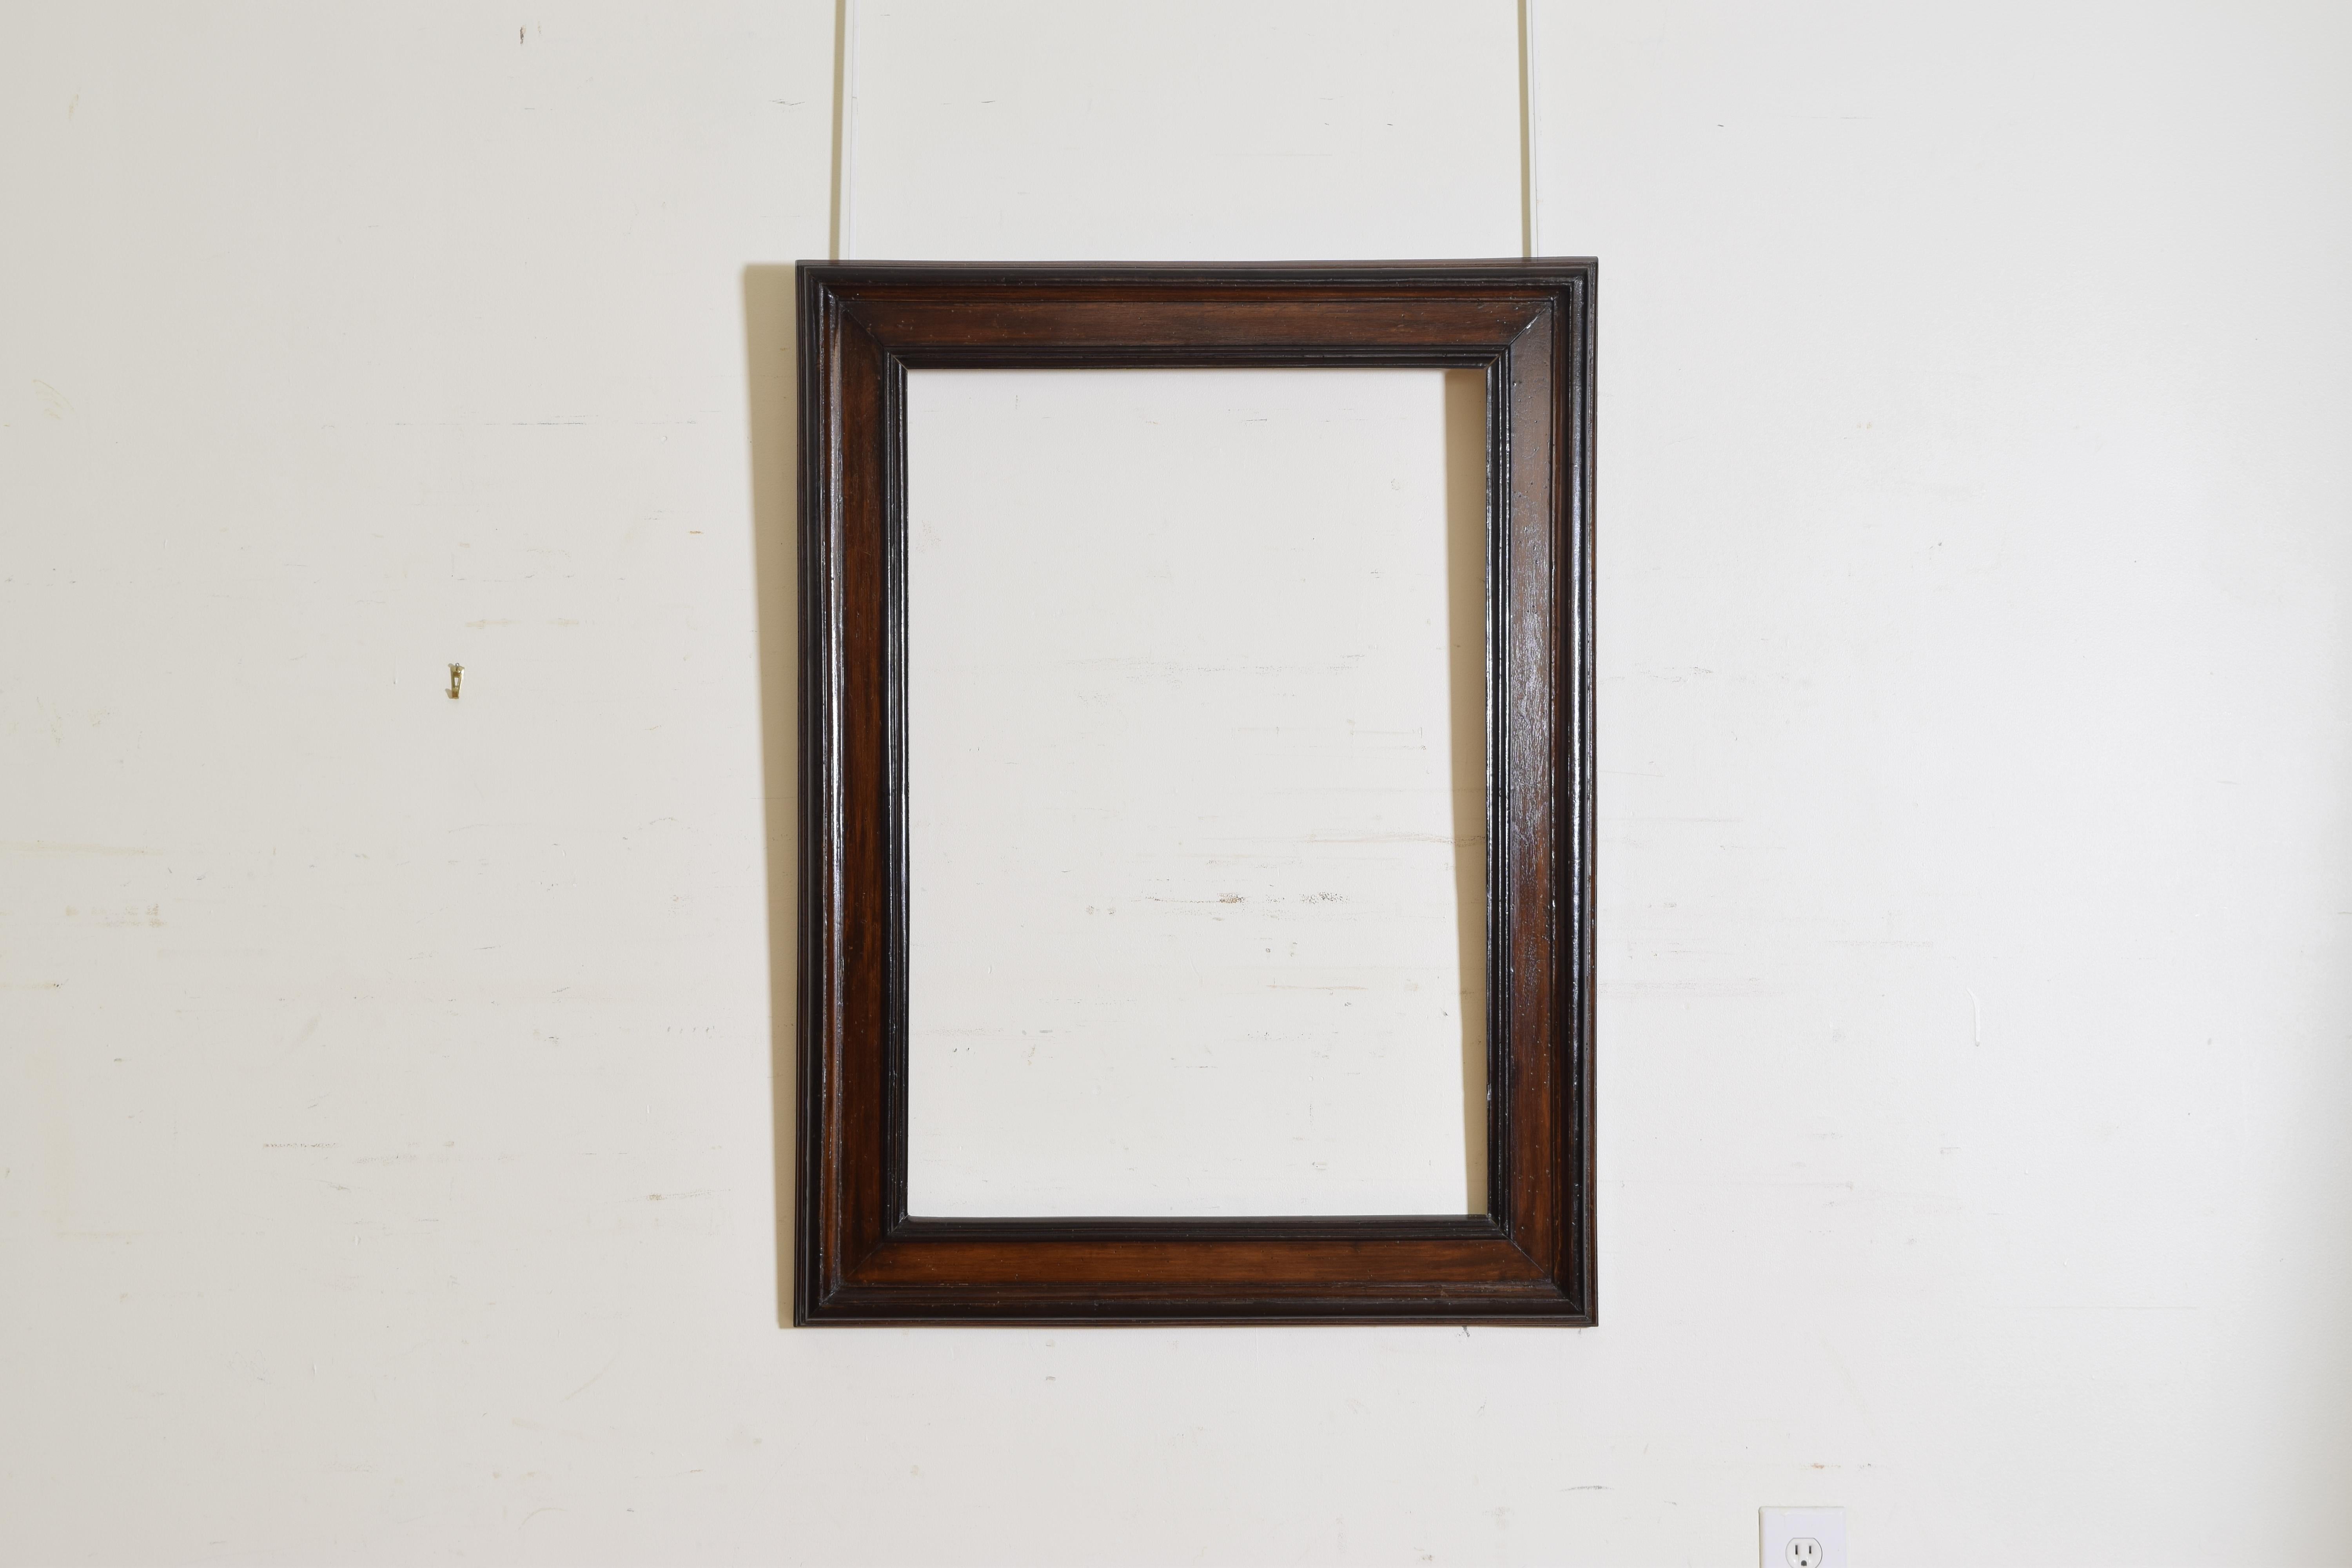 The rectangular frame or mirror with walnut veneer and raised ebonized moldings.